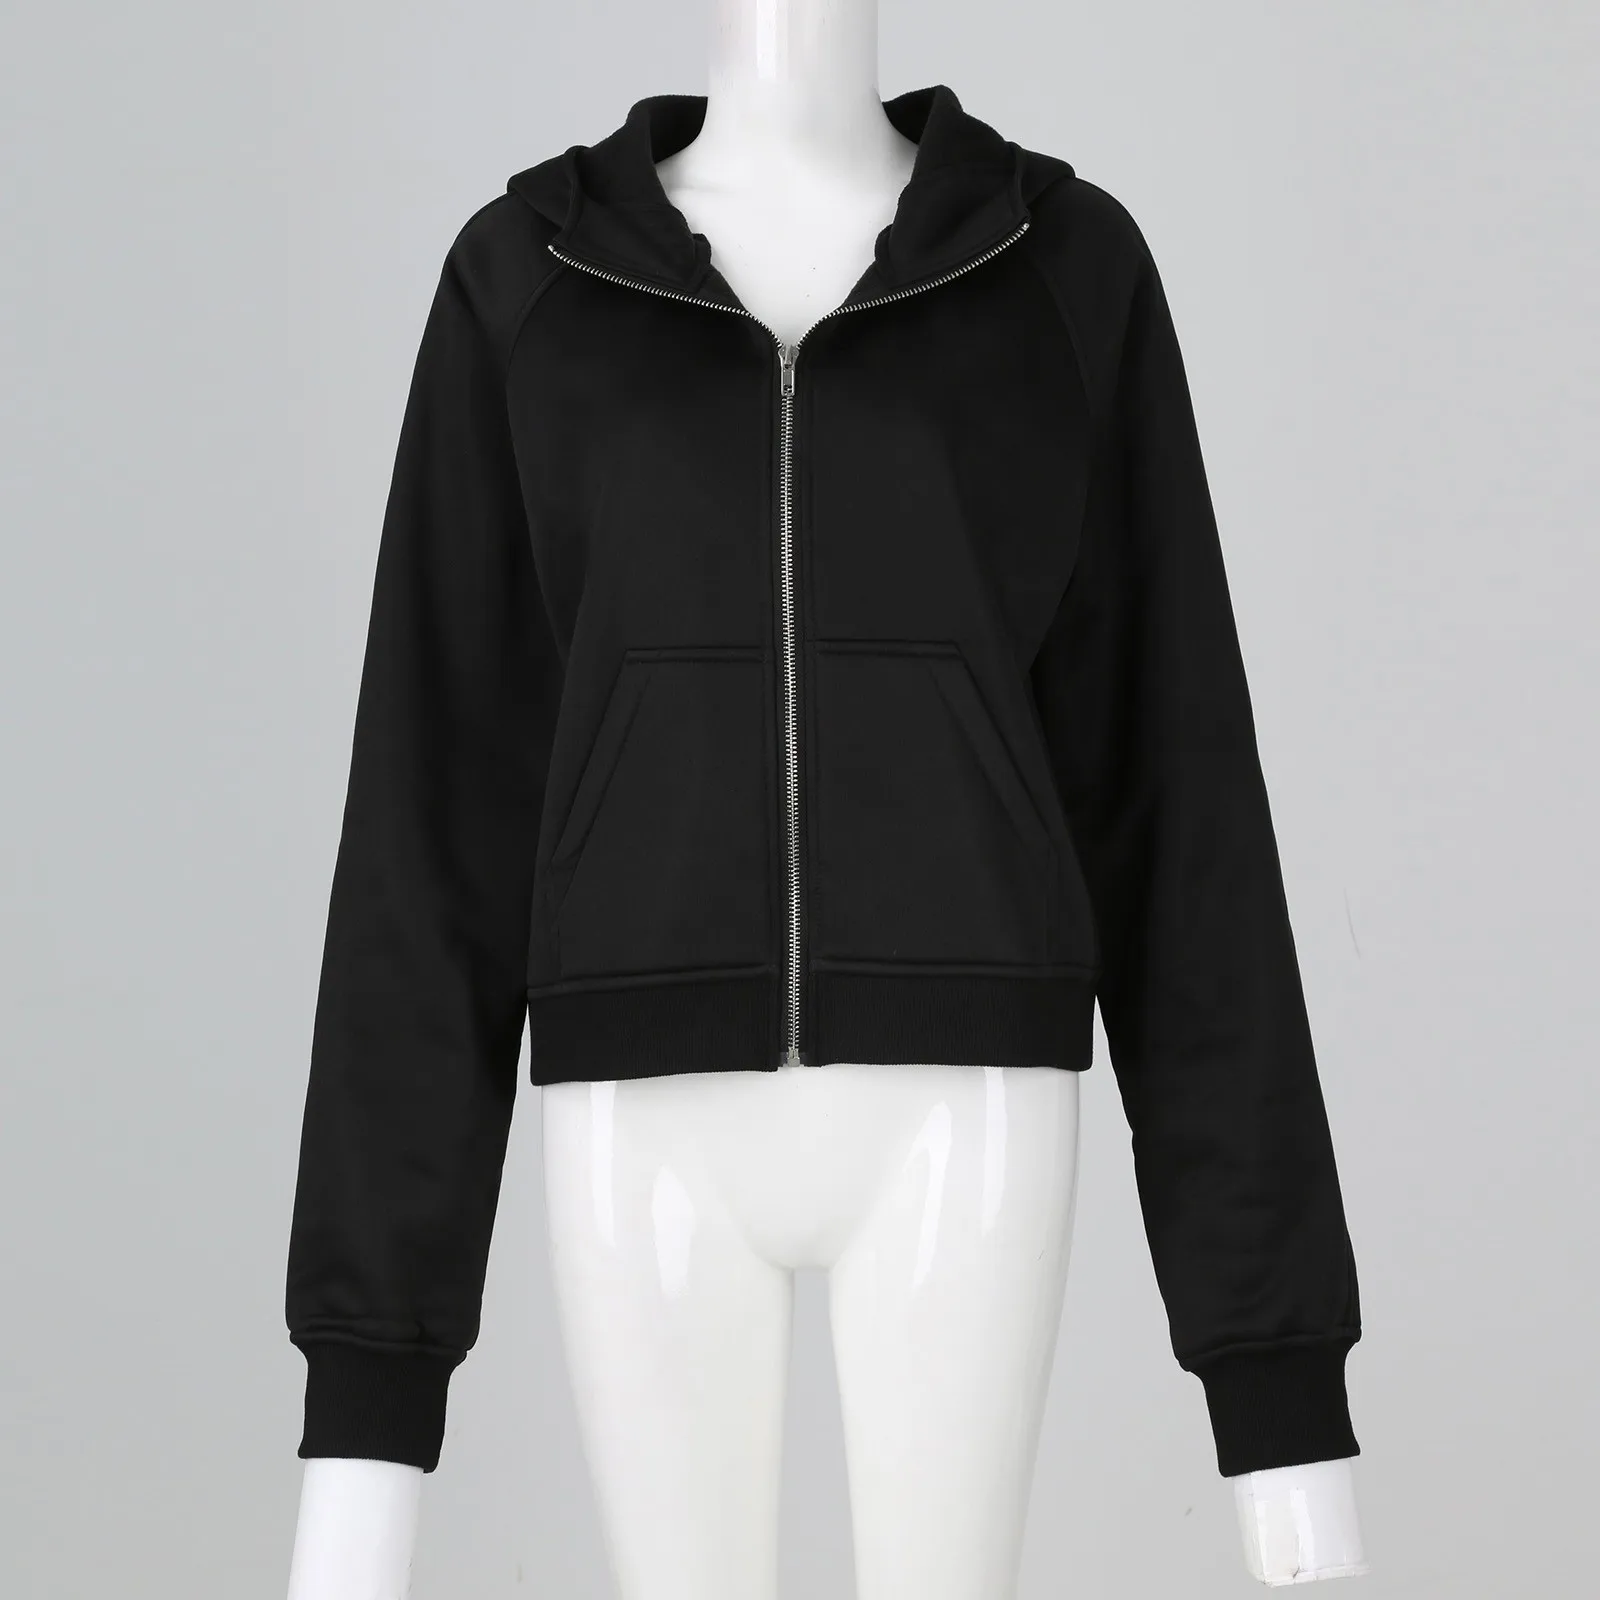 Women ' S Zip Up Hoodies Sweatshirts Clothes Teen Girl Casual Jackets Pockets With Roupas Femininas яке дамско палто дамско . ' - ' . 2